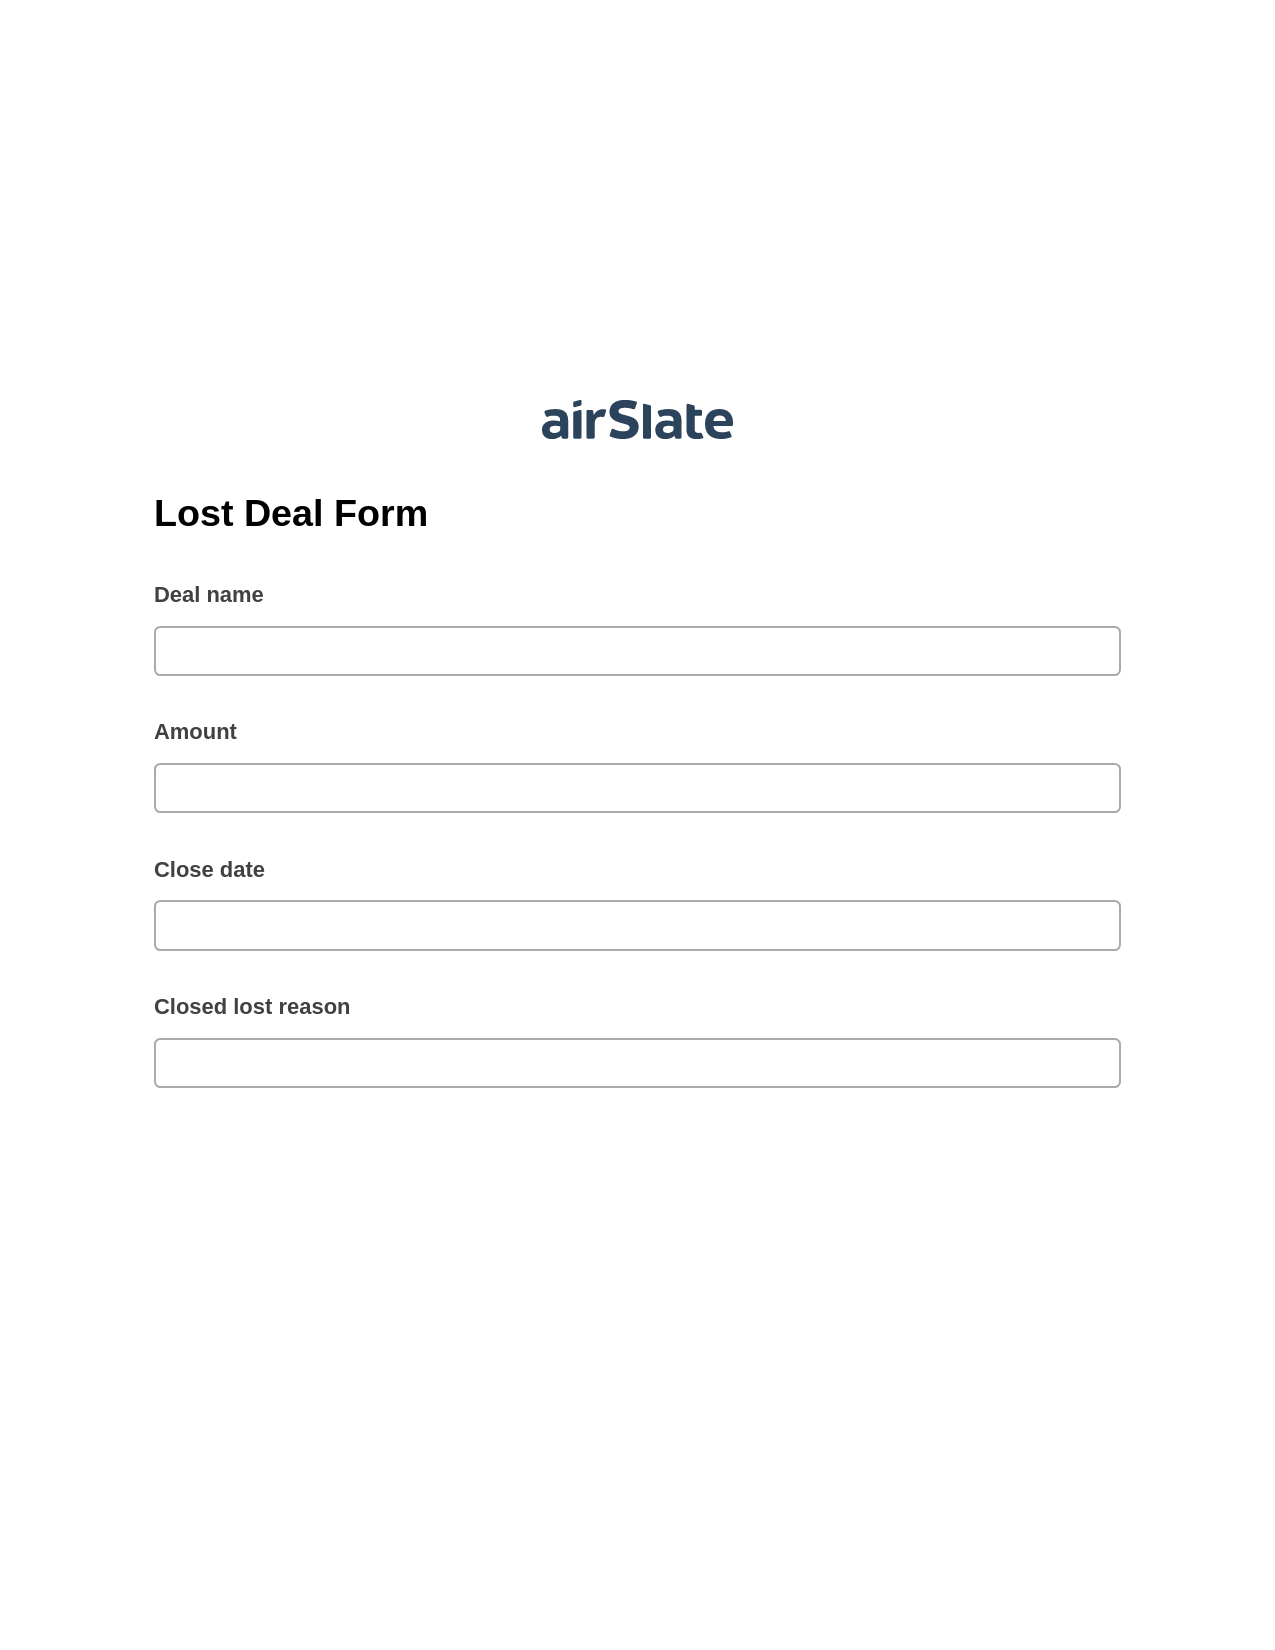 Lost Deal Form Prefill from NetSuite records, Slack Notification Bot, Slack Notification Postfinish Bot